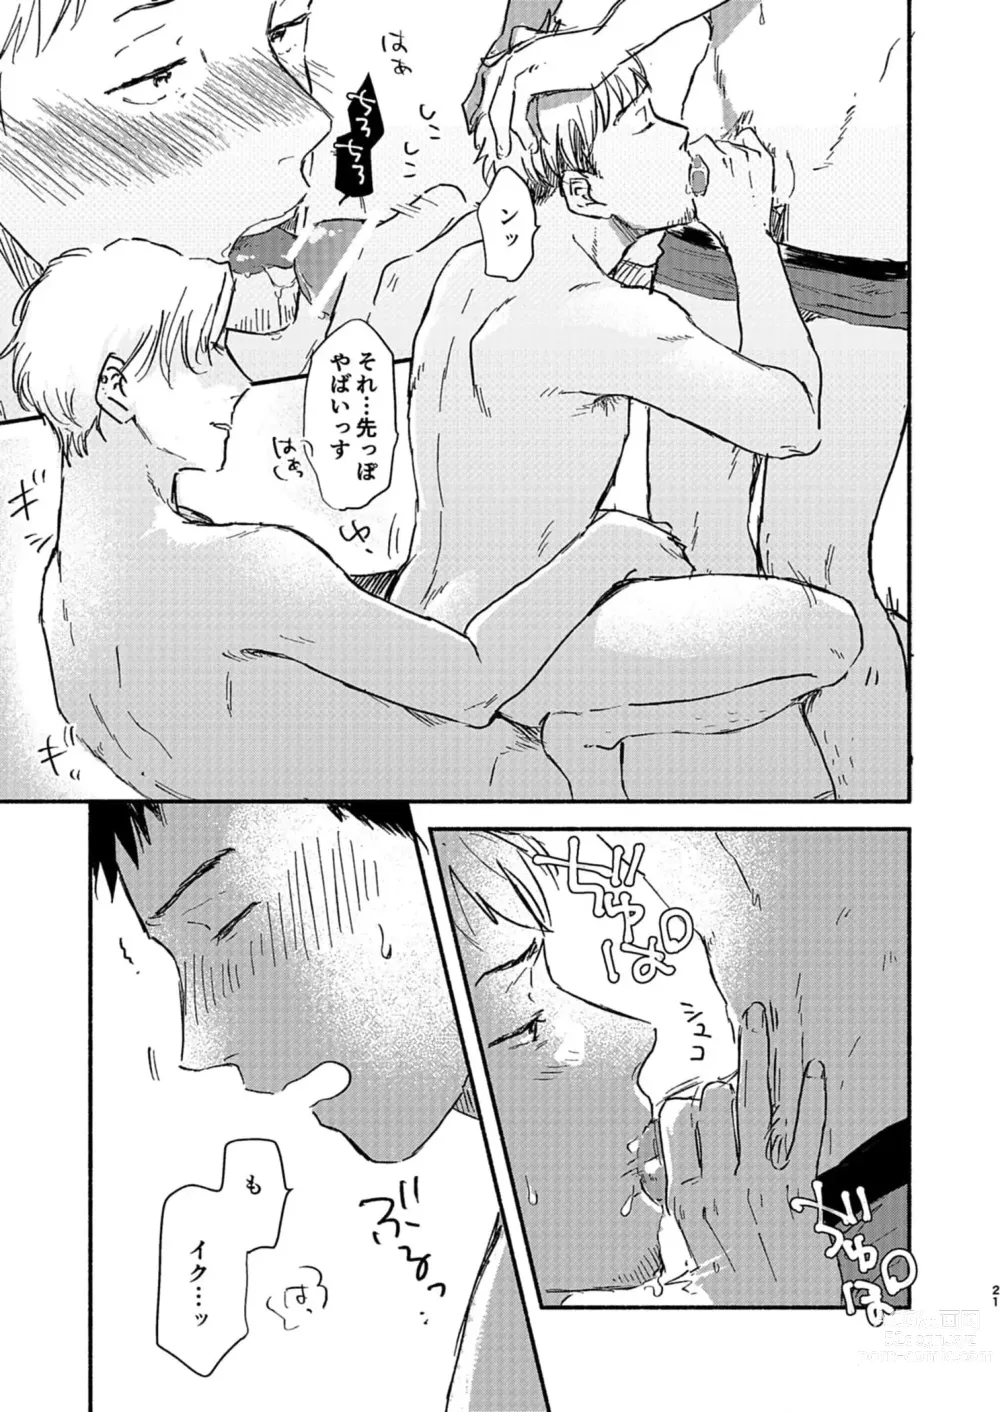 Page 21 of doujinshi Toaru GayVi Seisaku Gaisha Staff no Shanai Renai Jijou - The internal love affairs of the staff of a certain gay video production company.